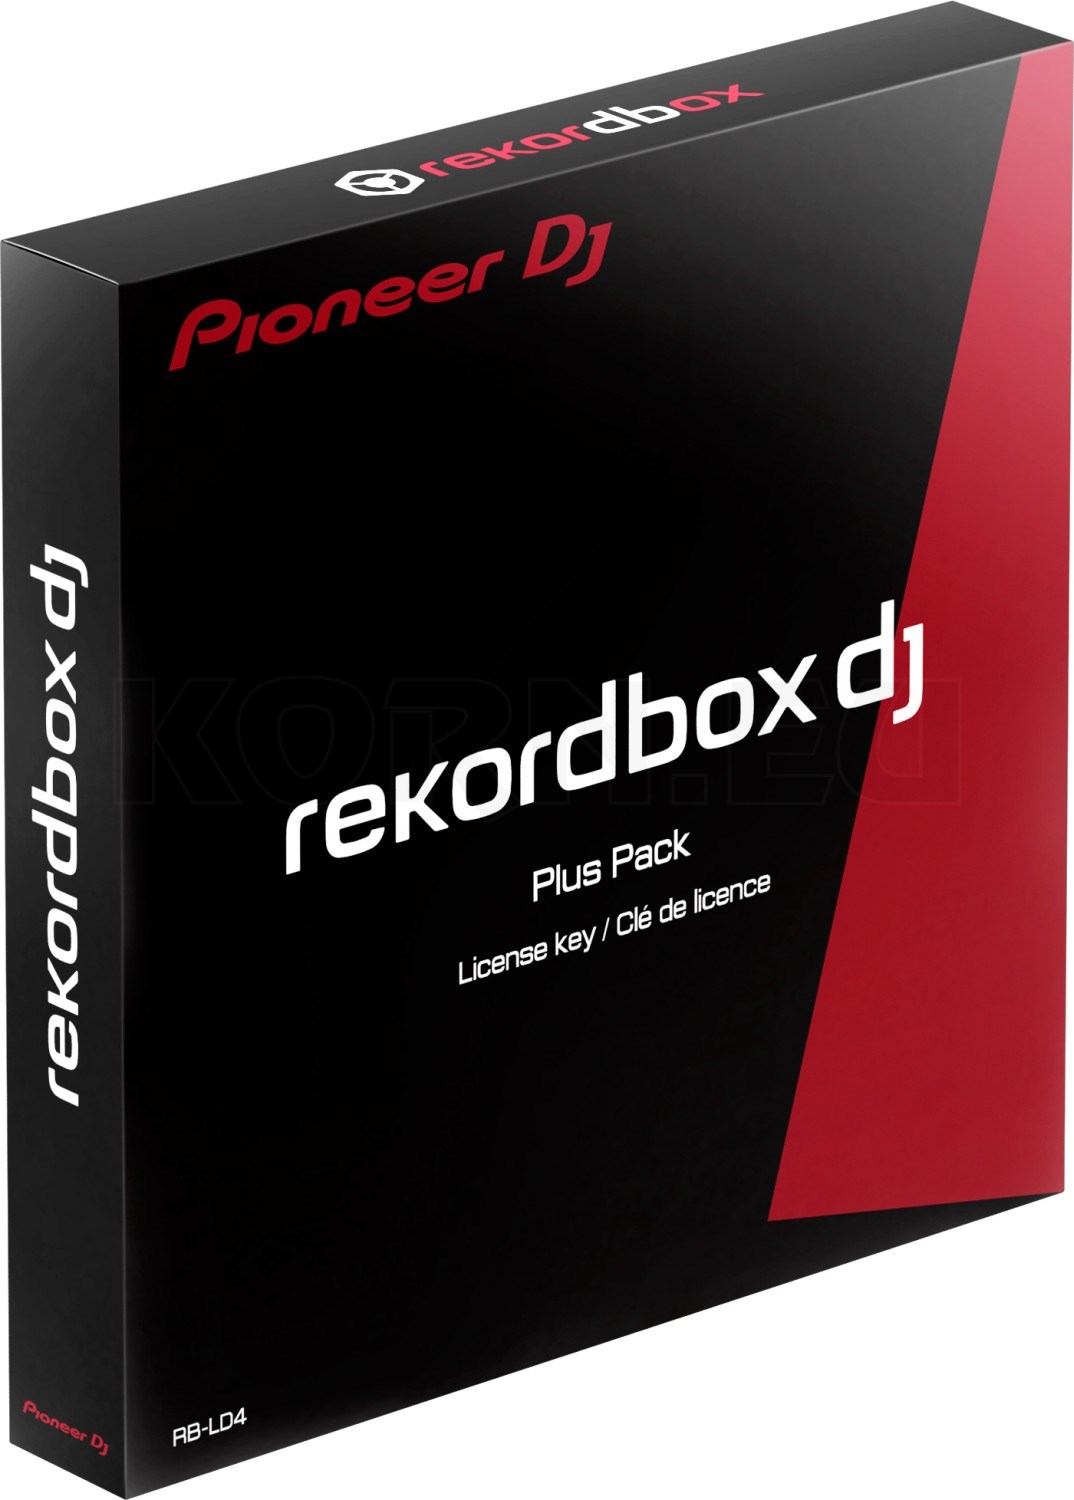 Pioneer DJ rekordbox 6.7.4 download the last version for windows